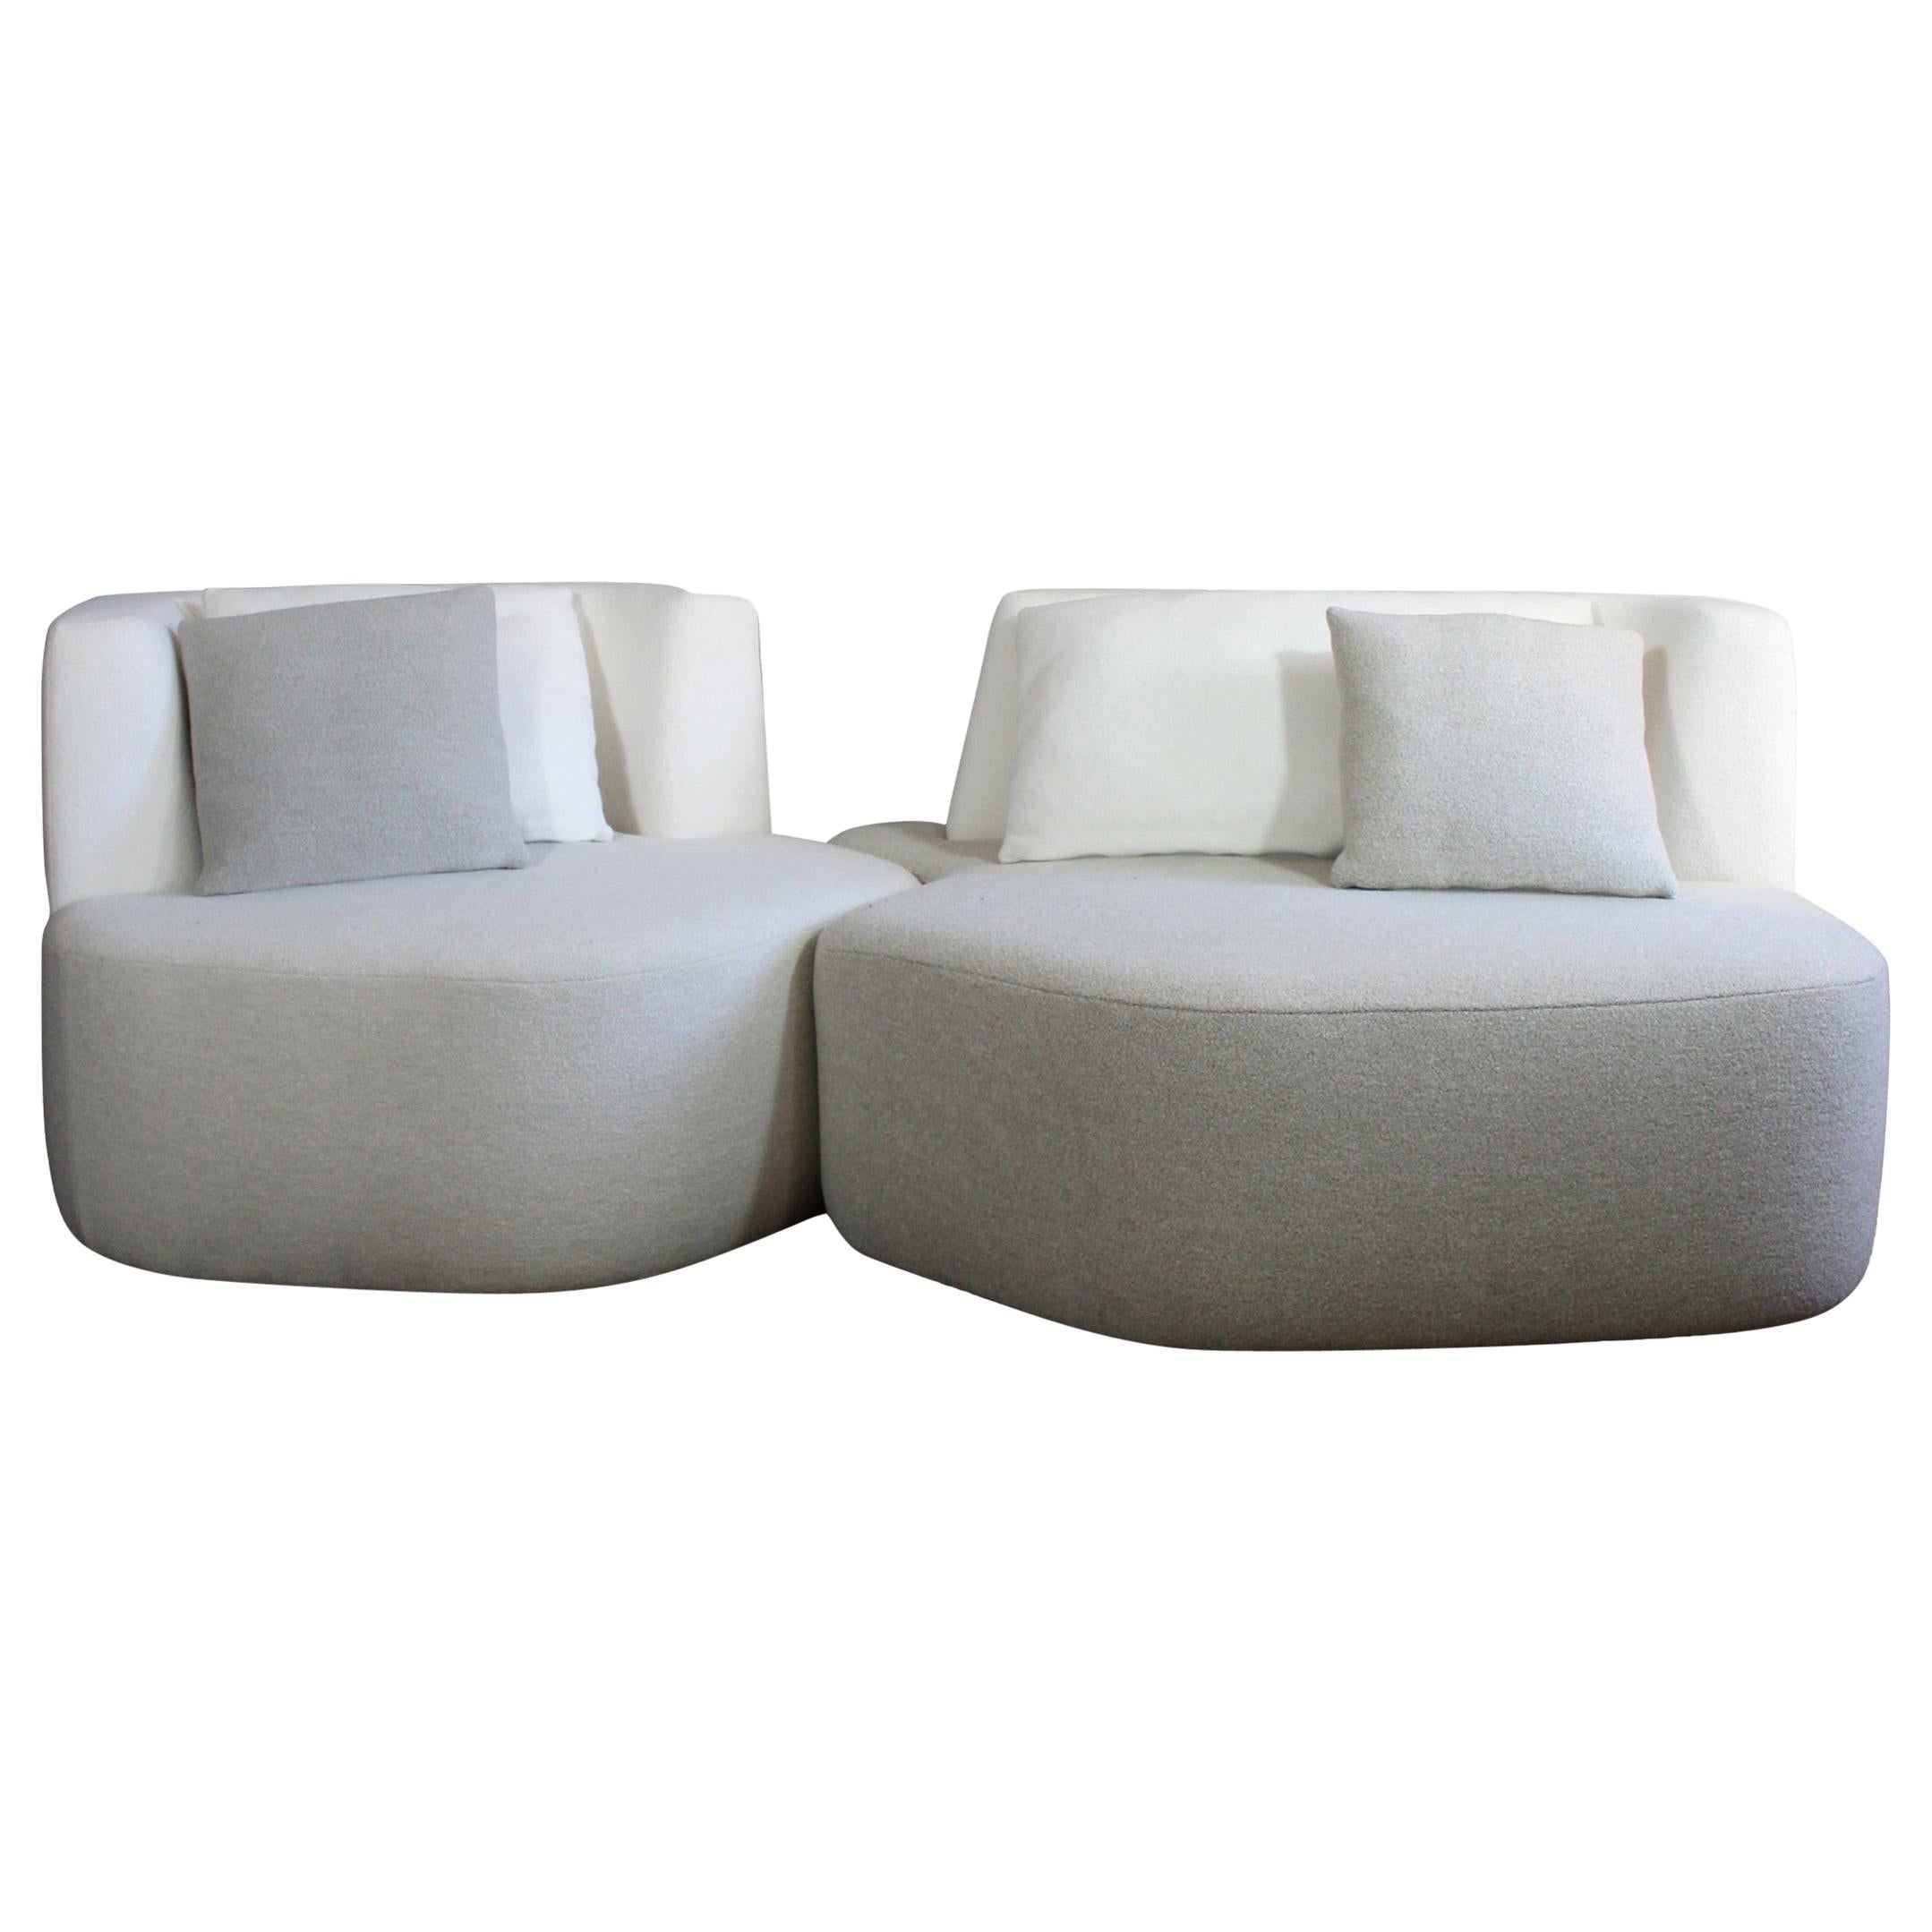 Organic Sofa Pierre in White Cream Wool 2 Modules Made in France Customizable